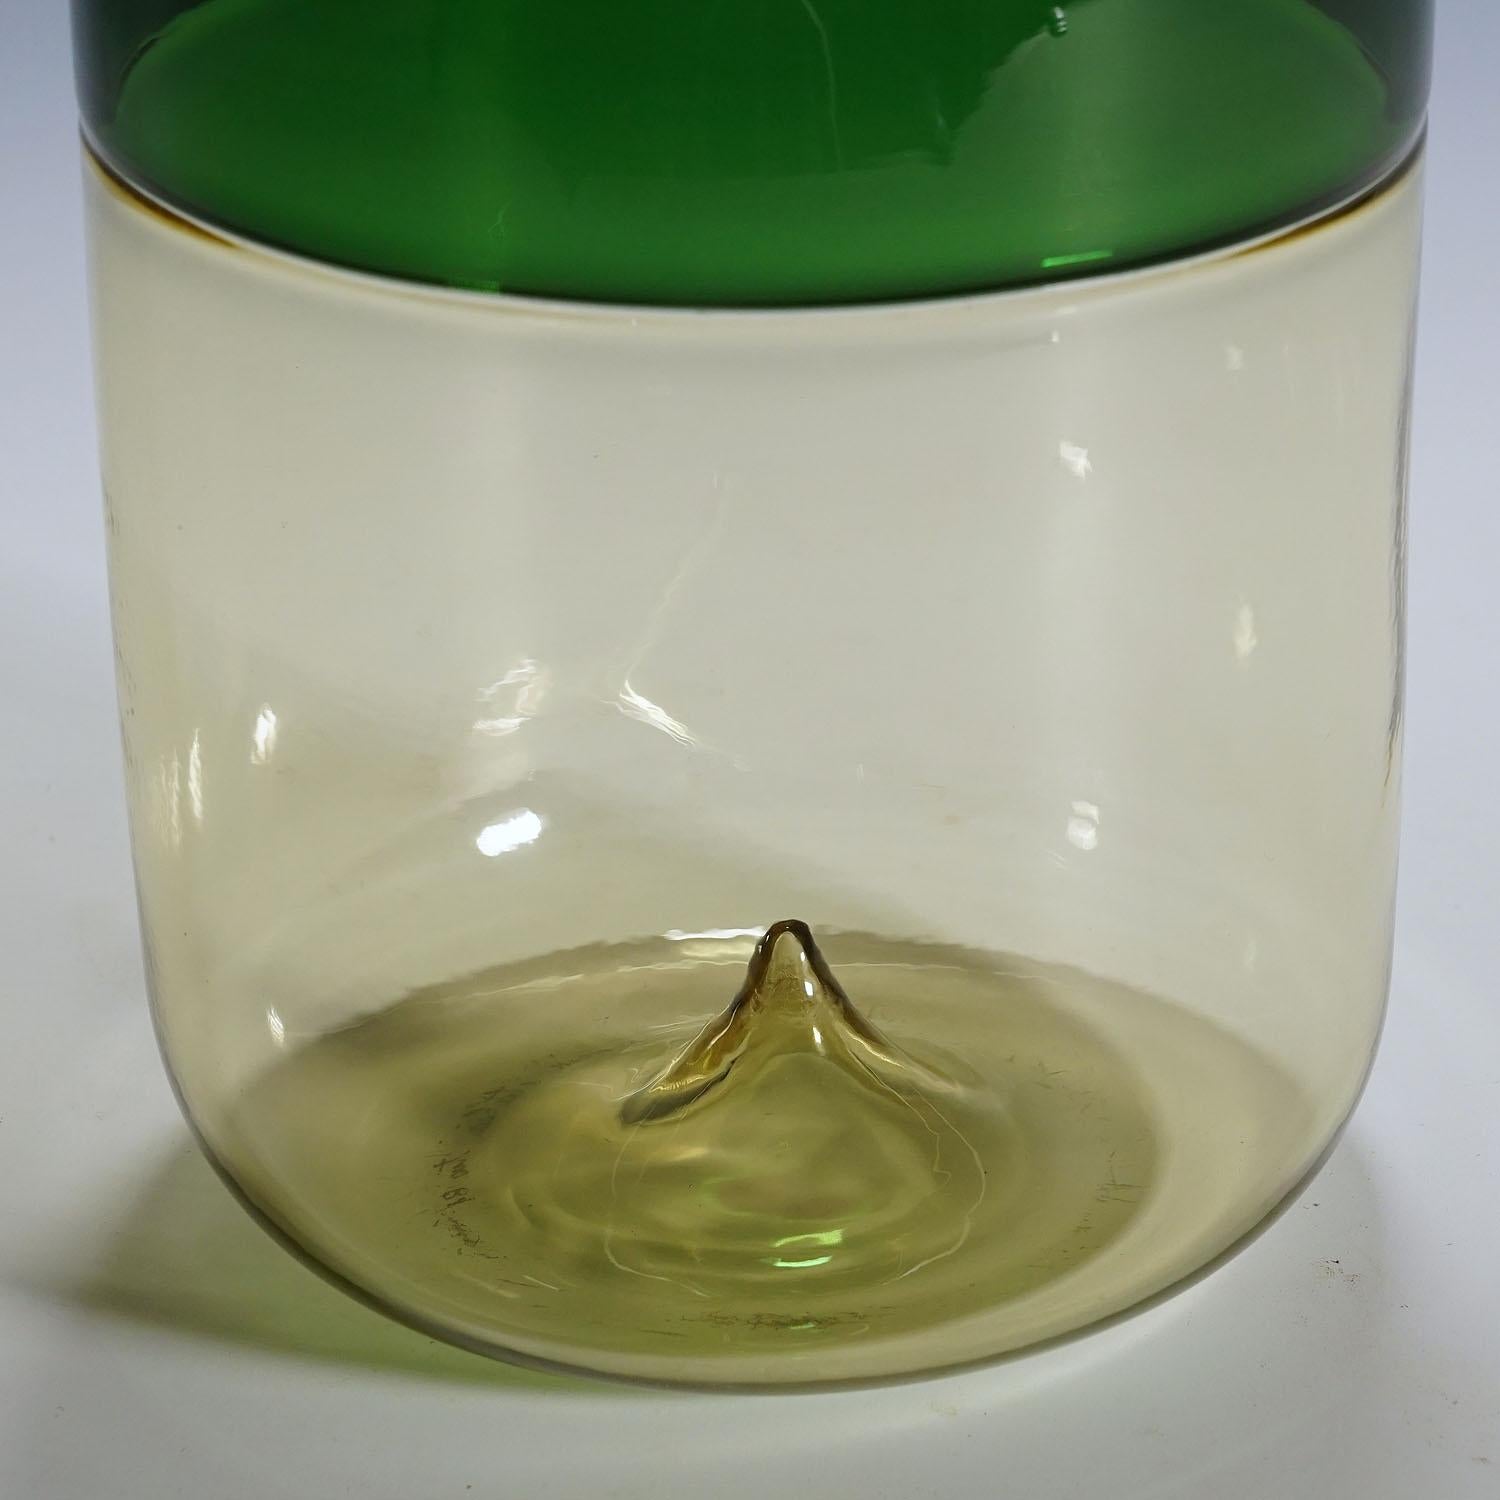 Venini Kunstglasvase 'Bolle' von Tapio Wirkkala für Venini, Murano 1966

Vintage-Vase aus Kunstglas aus der Serie 